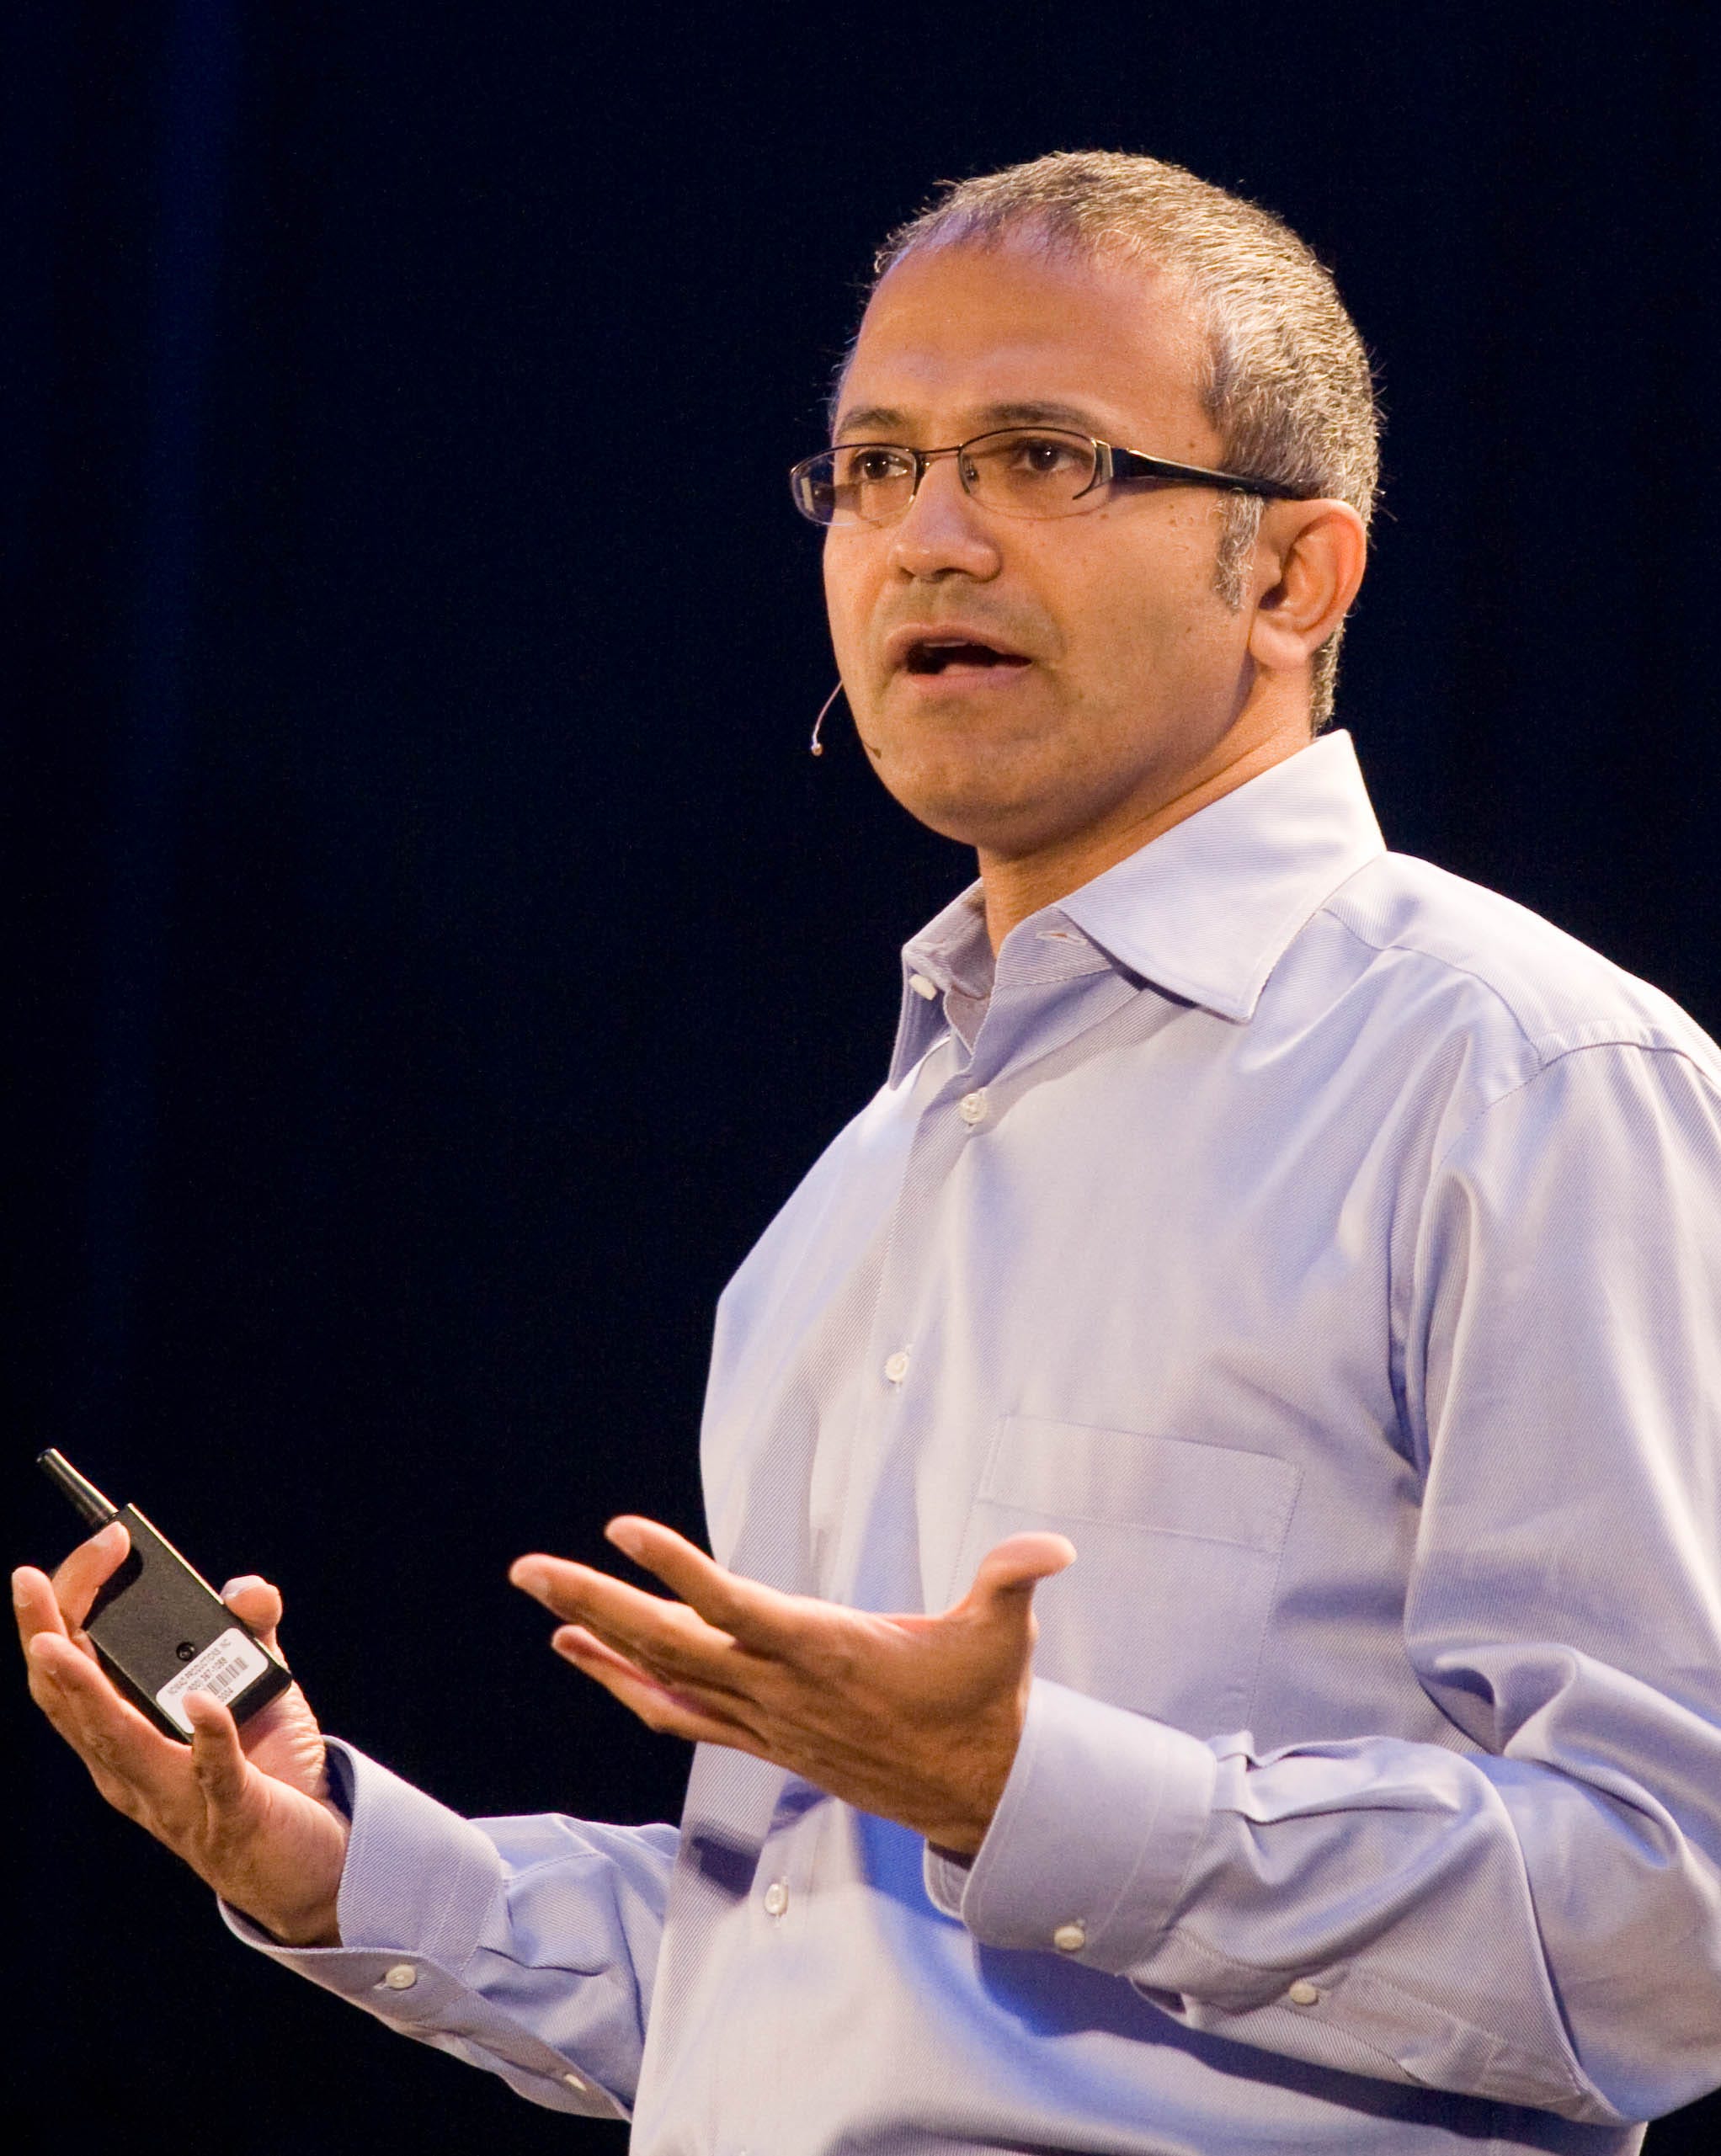 Satya Nadella, senior vice president of Microsoft's search, portal and advertising platform group